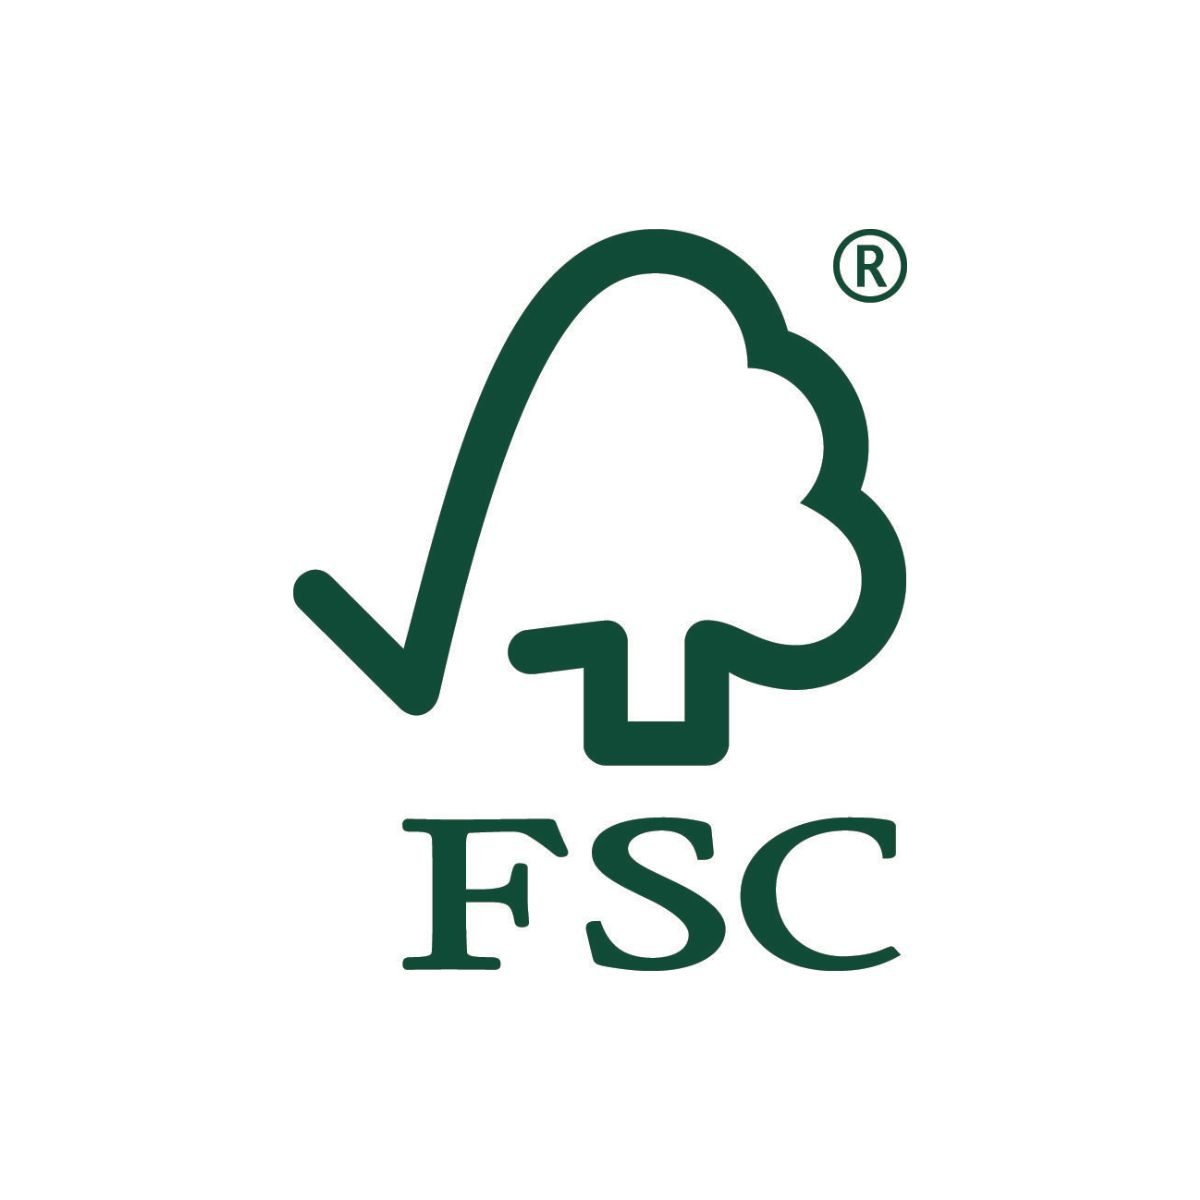 Forest Stewardship Council ® (FSC)